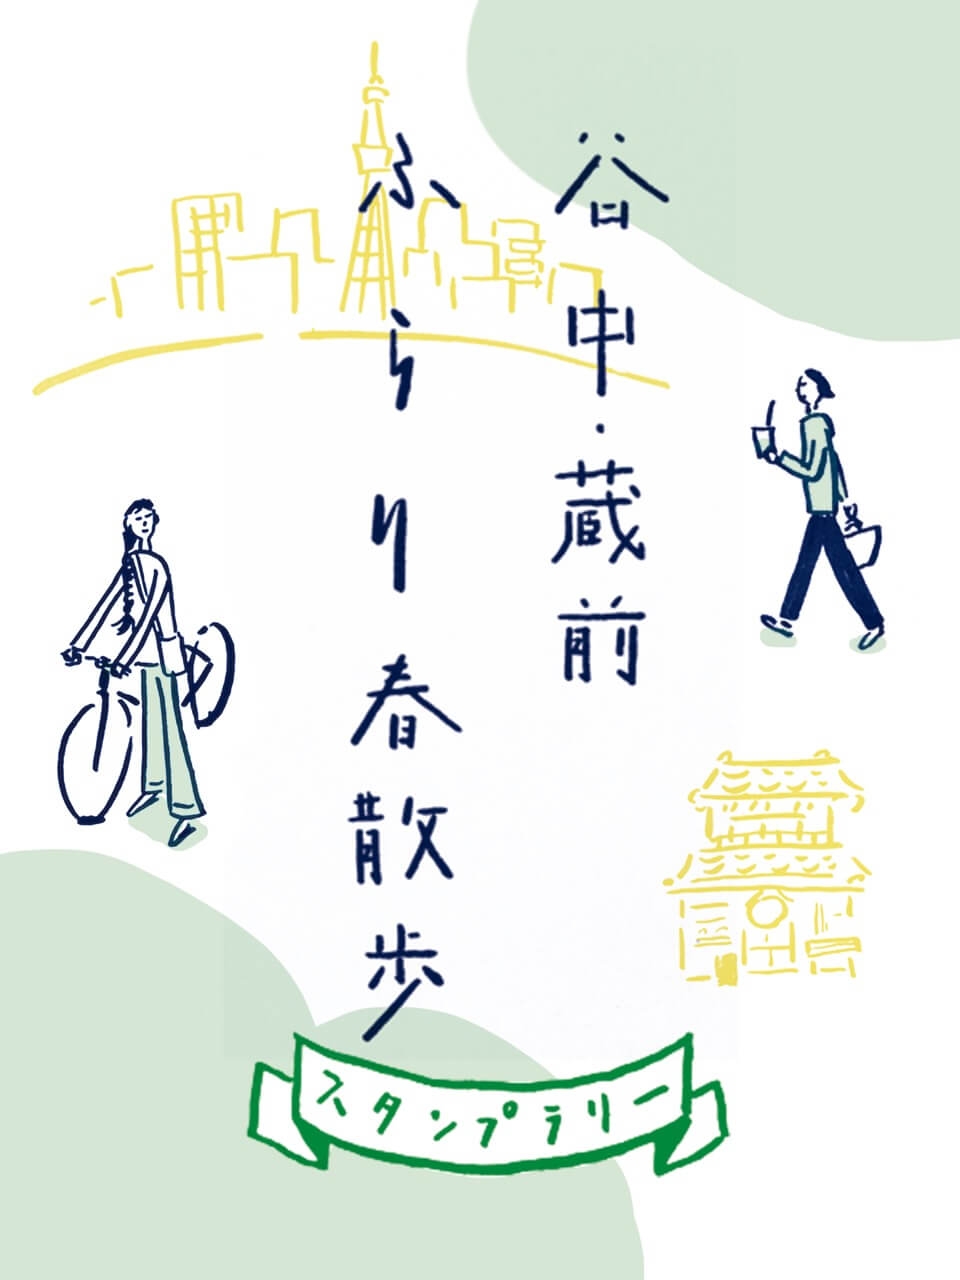 Bicycle stamp-rally event in East Tokyo: “Yanaka/Kuramae Furari Haru Sanpo” will start